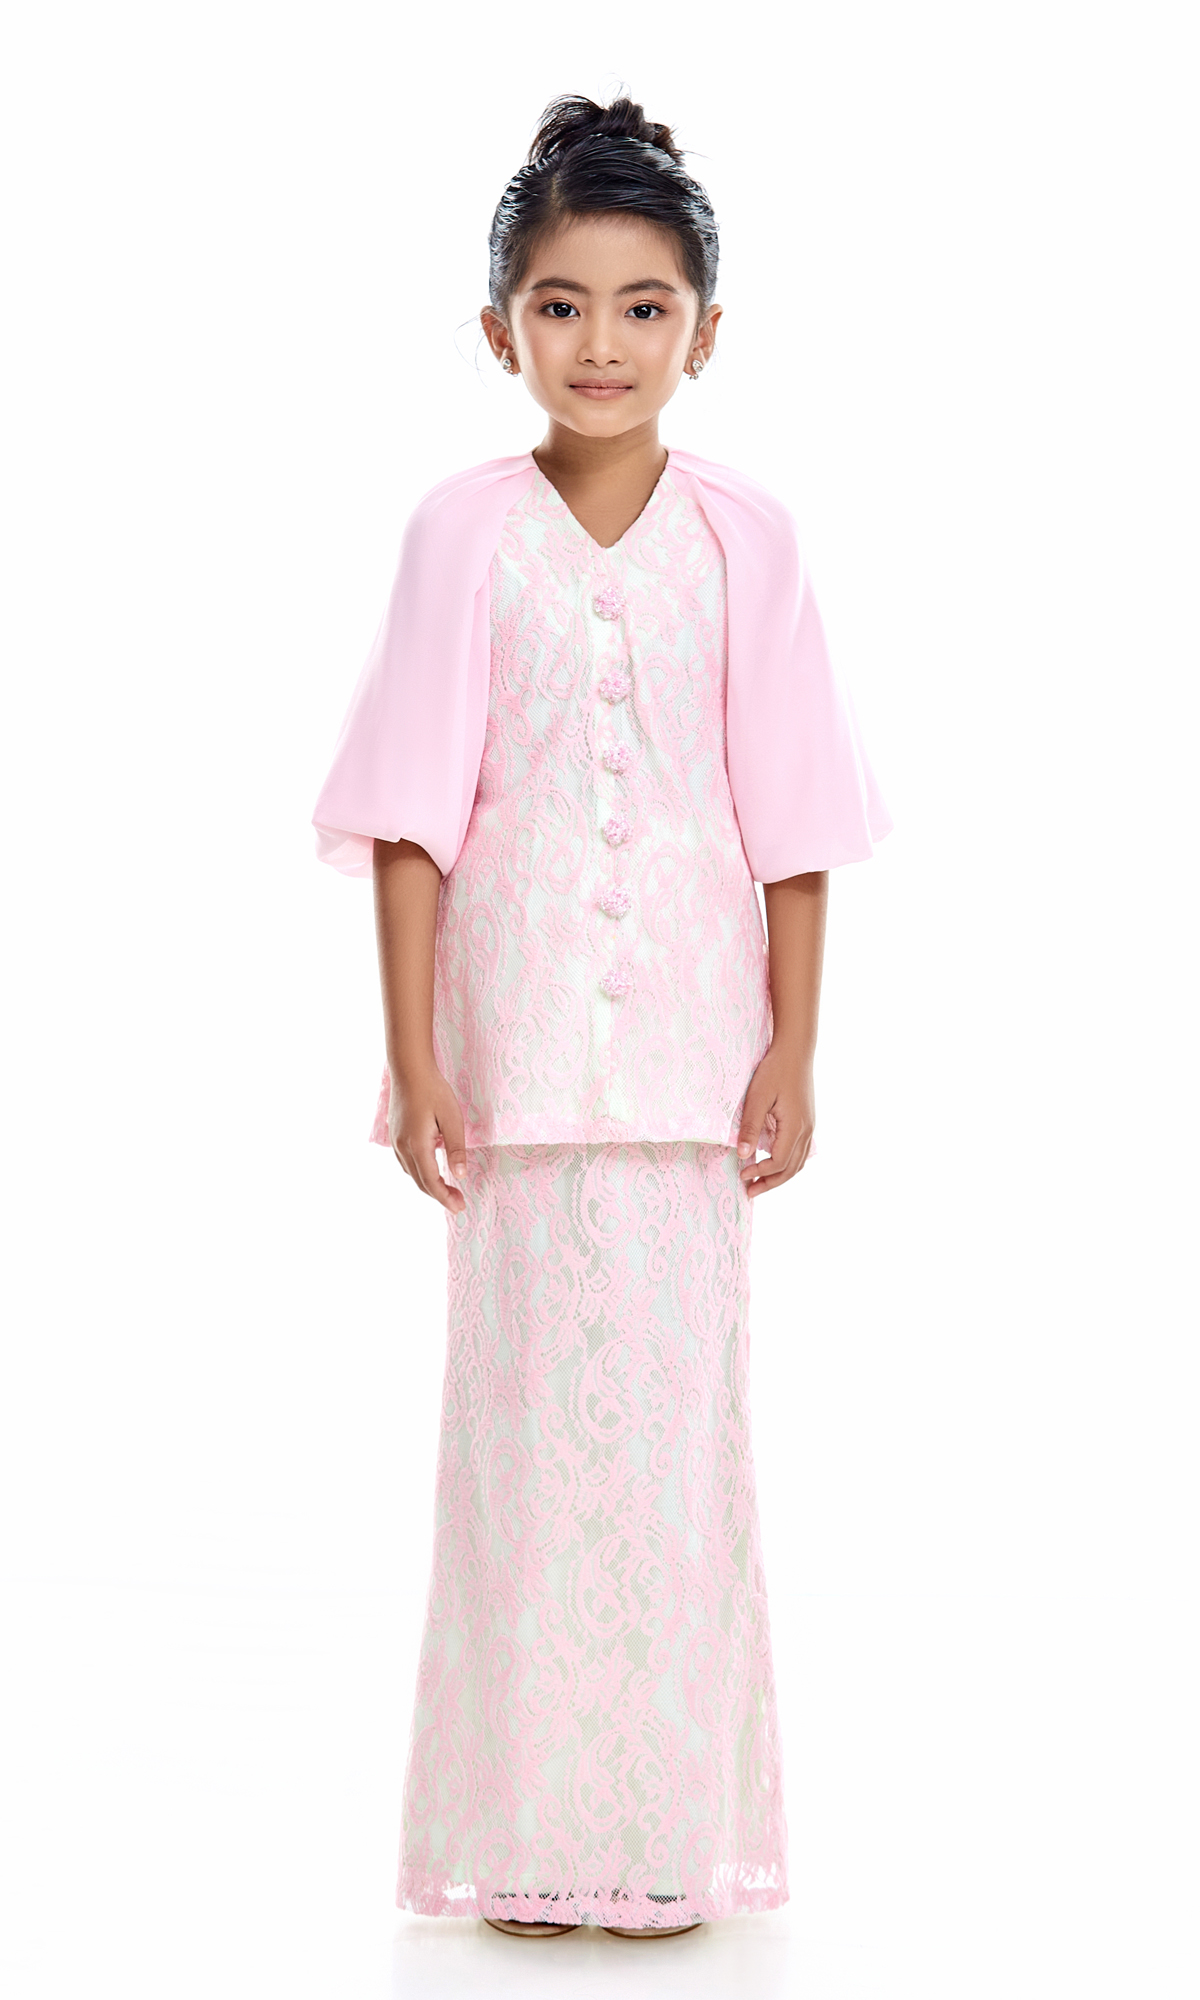 Veelda Kurung Kids in Soft Pink